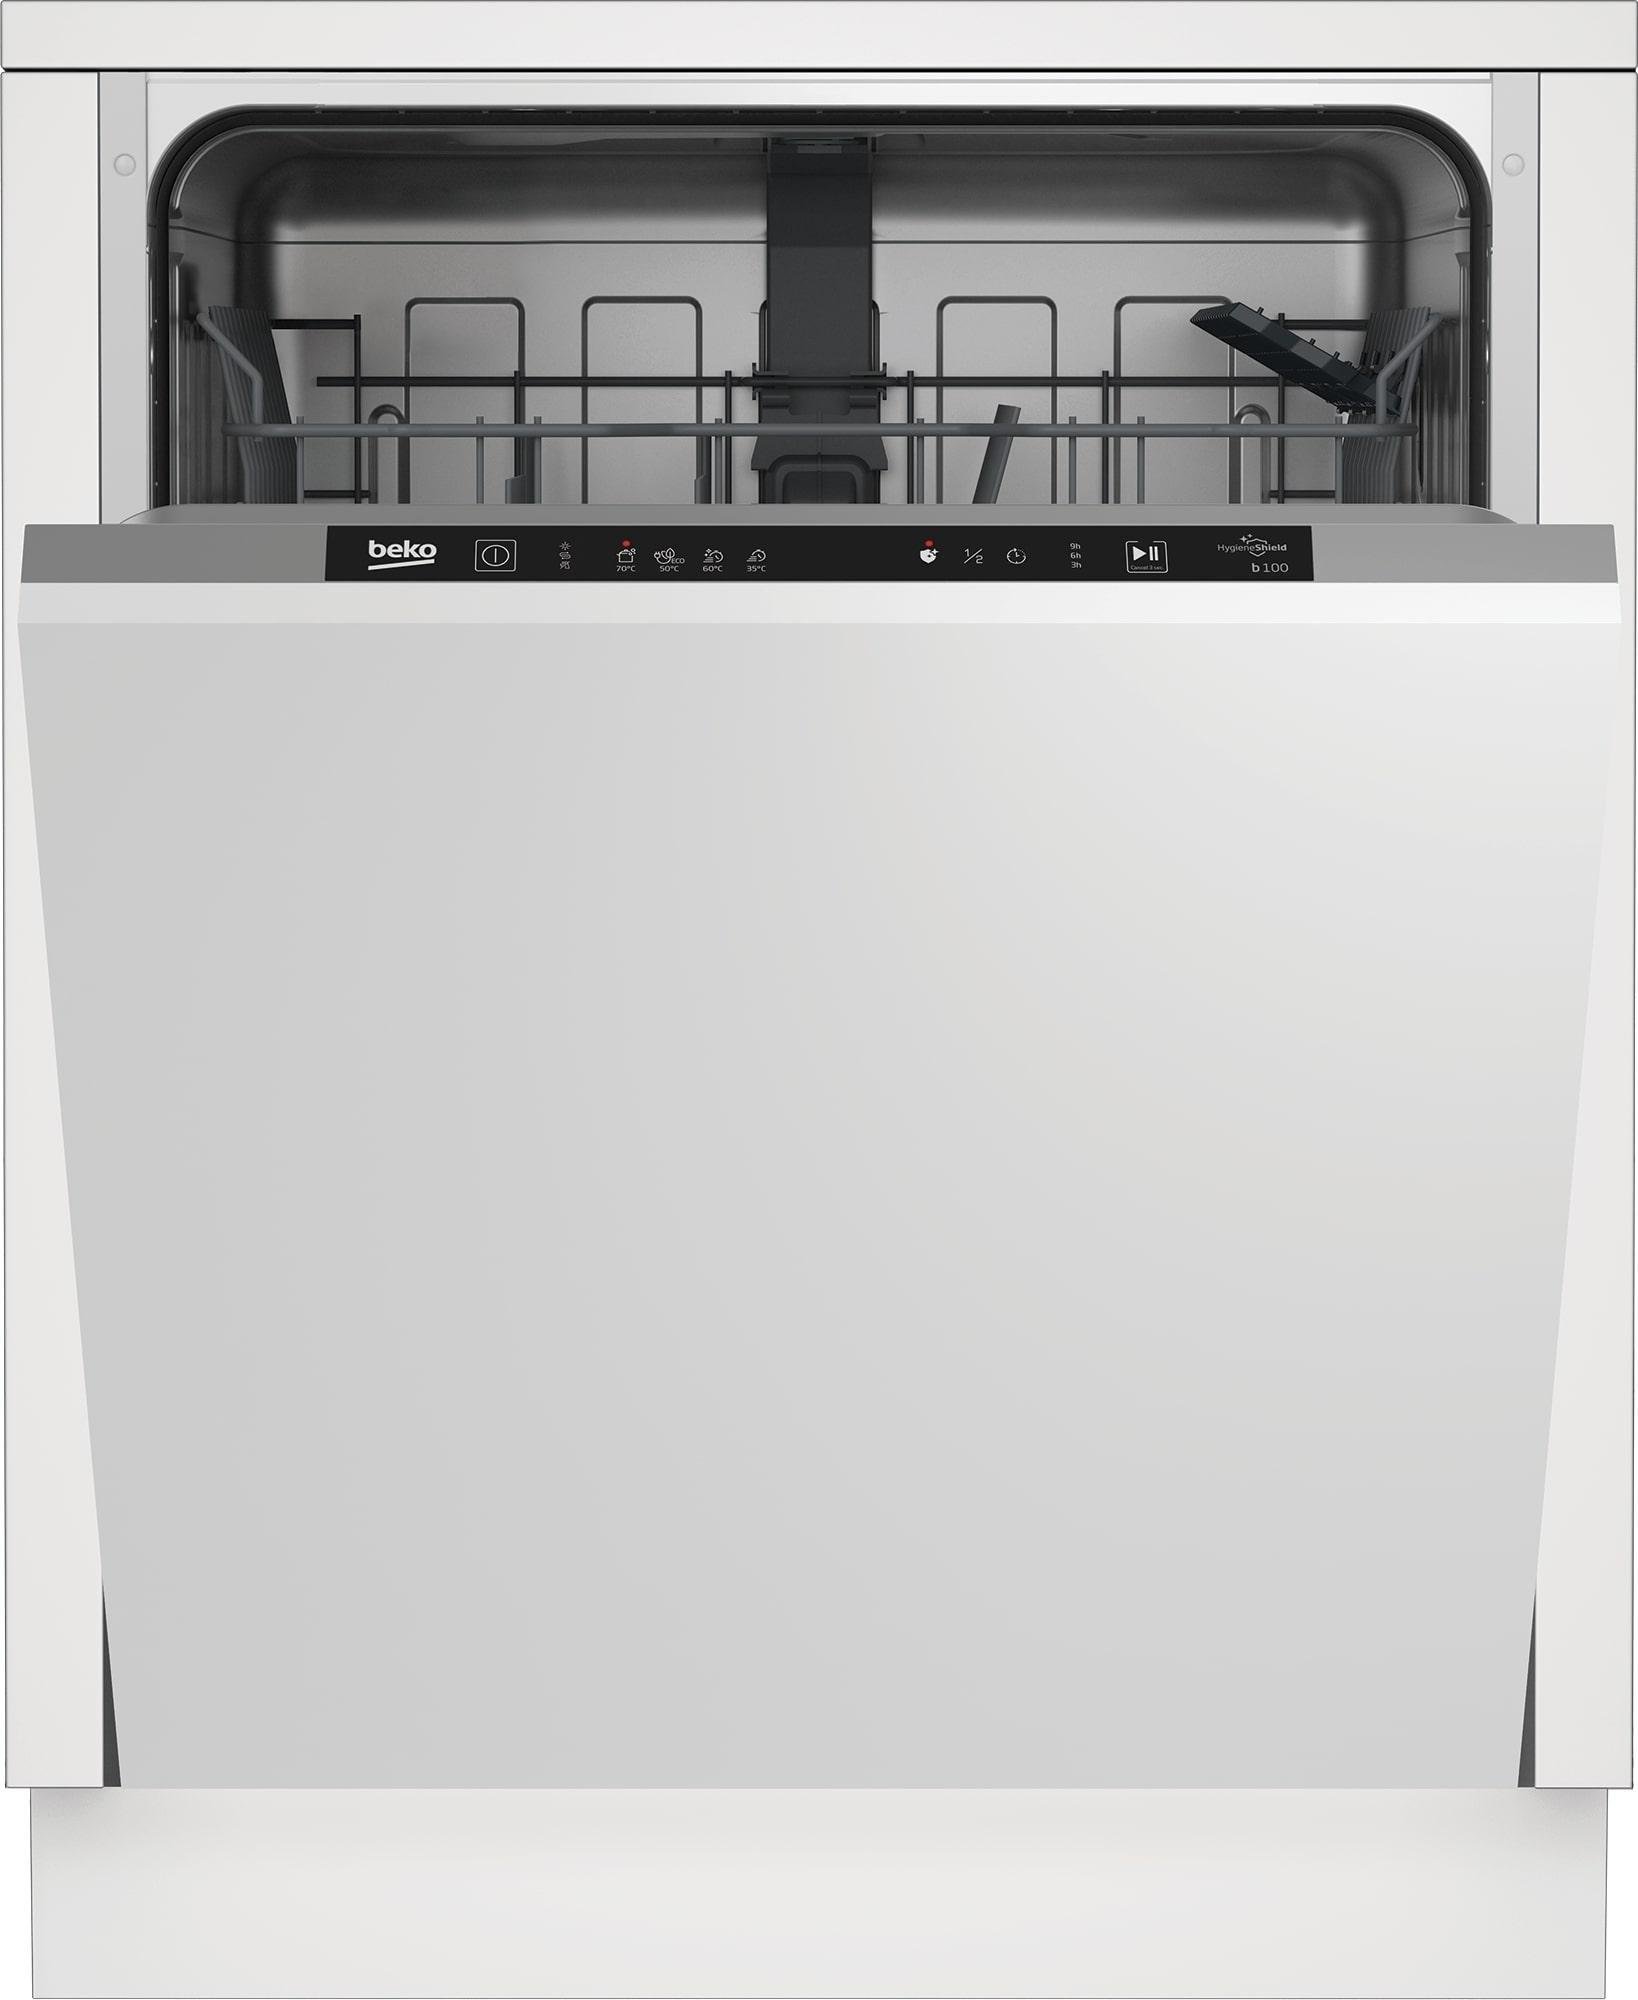 Masini de spalat vase incorporabile - Mașina de spălat vase incorporabila  Beko BDIN14320,13 seturi,49 dB, 59,8 cm